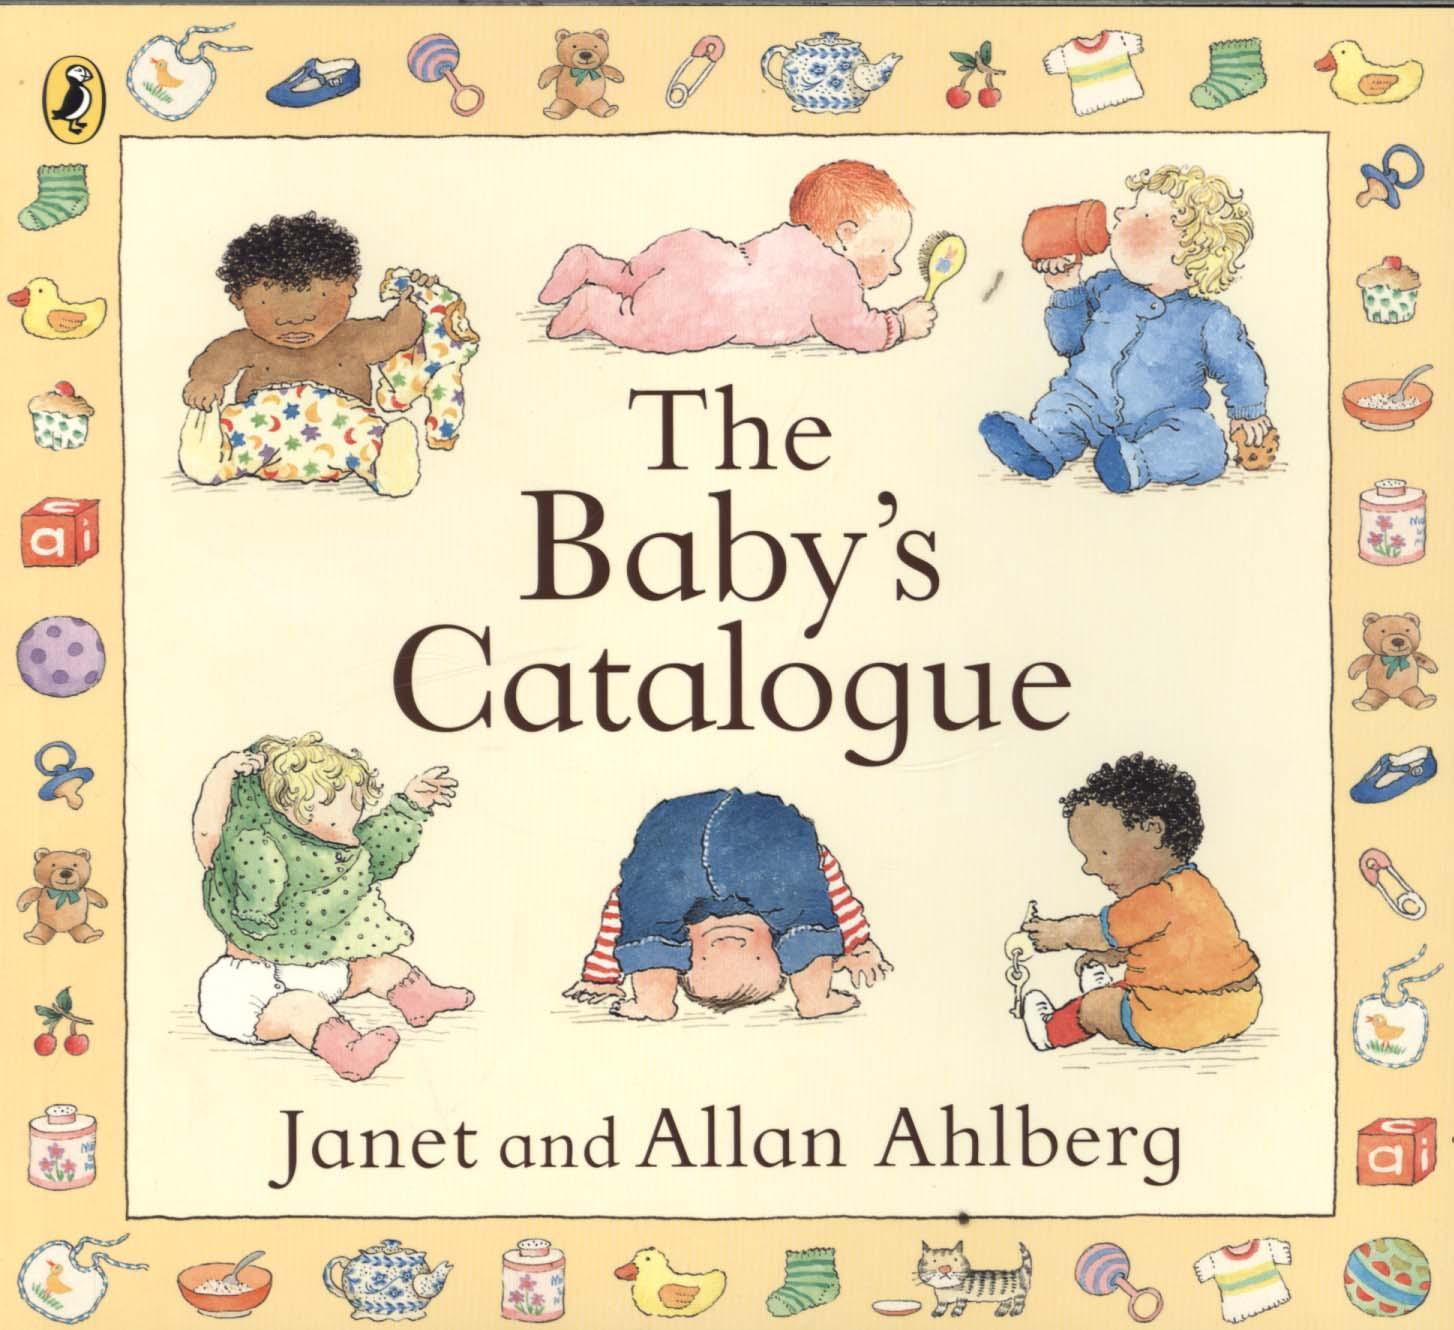 Baby's Catalogue - Allan Ahlberg